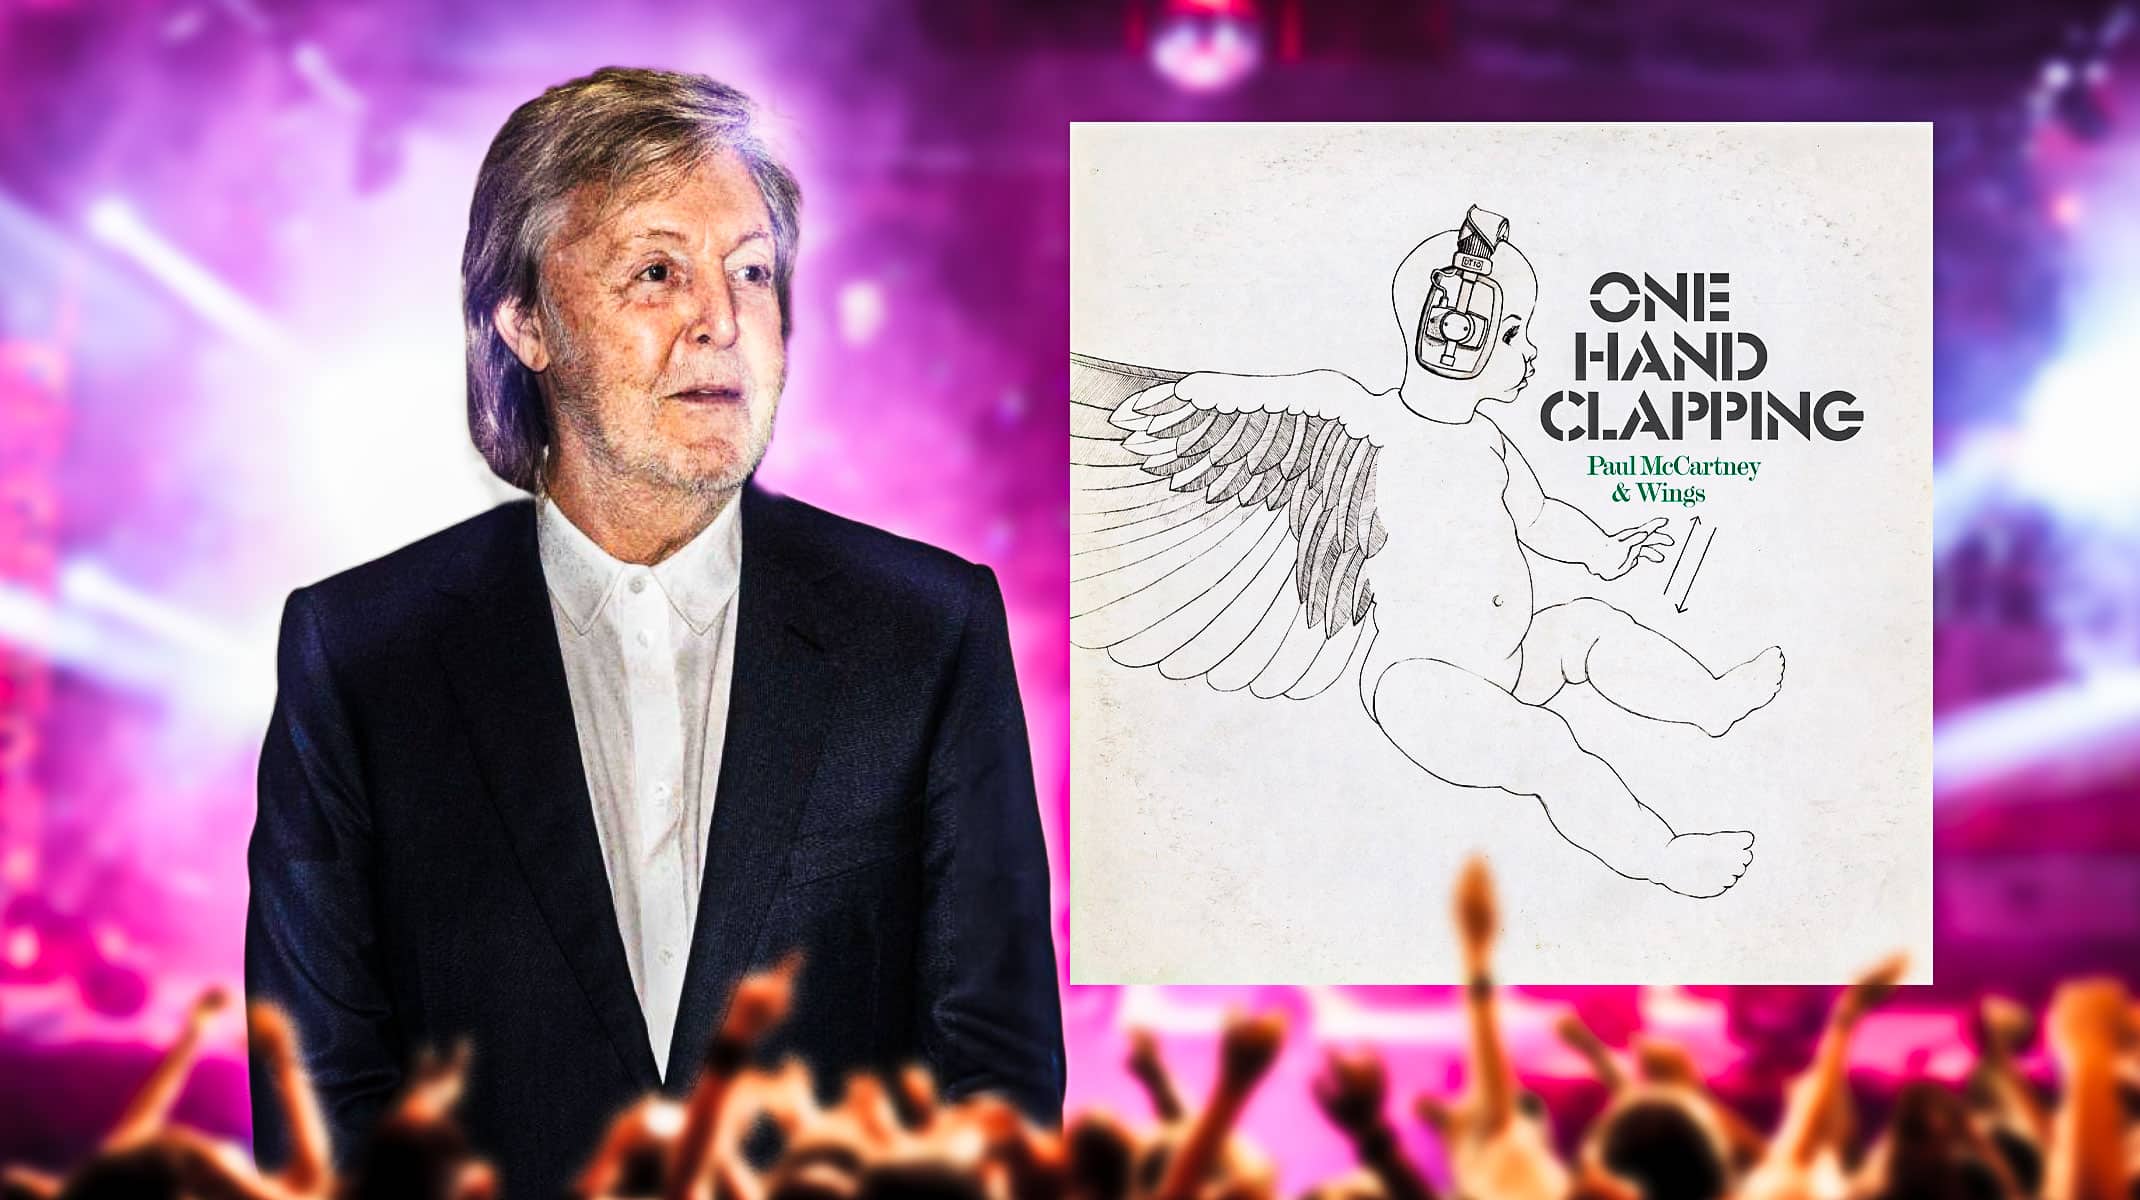 Paul McCartney's bold One Hand Clapping bootleg announcement